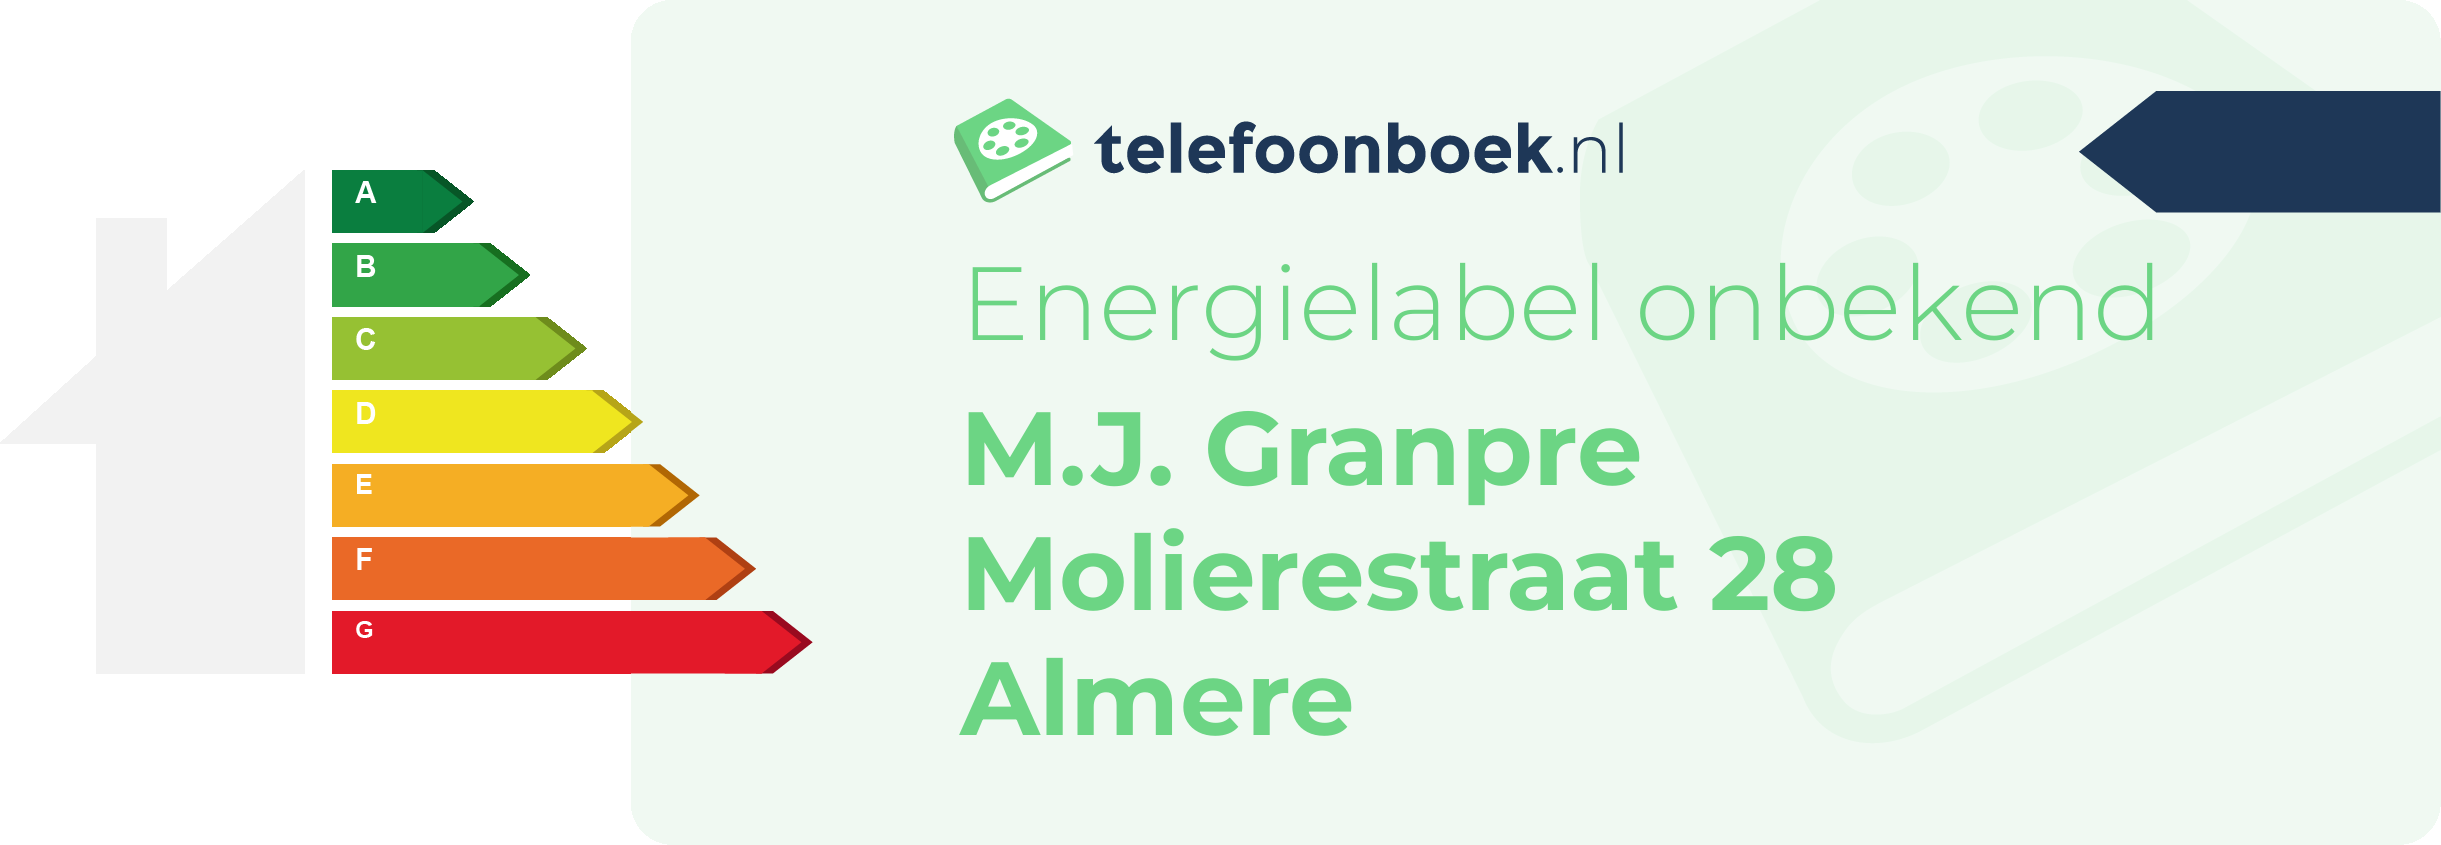 Energielabel M.J. Granpre Molierestraat 28 Almere